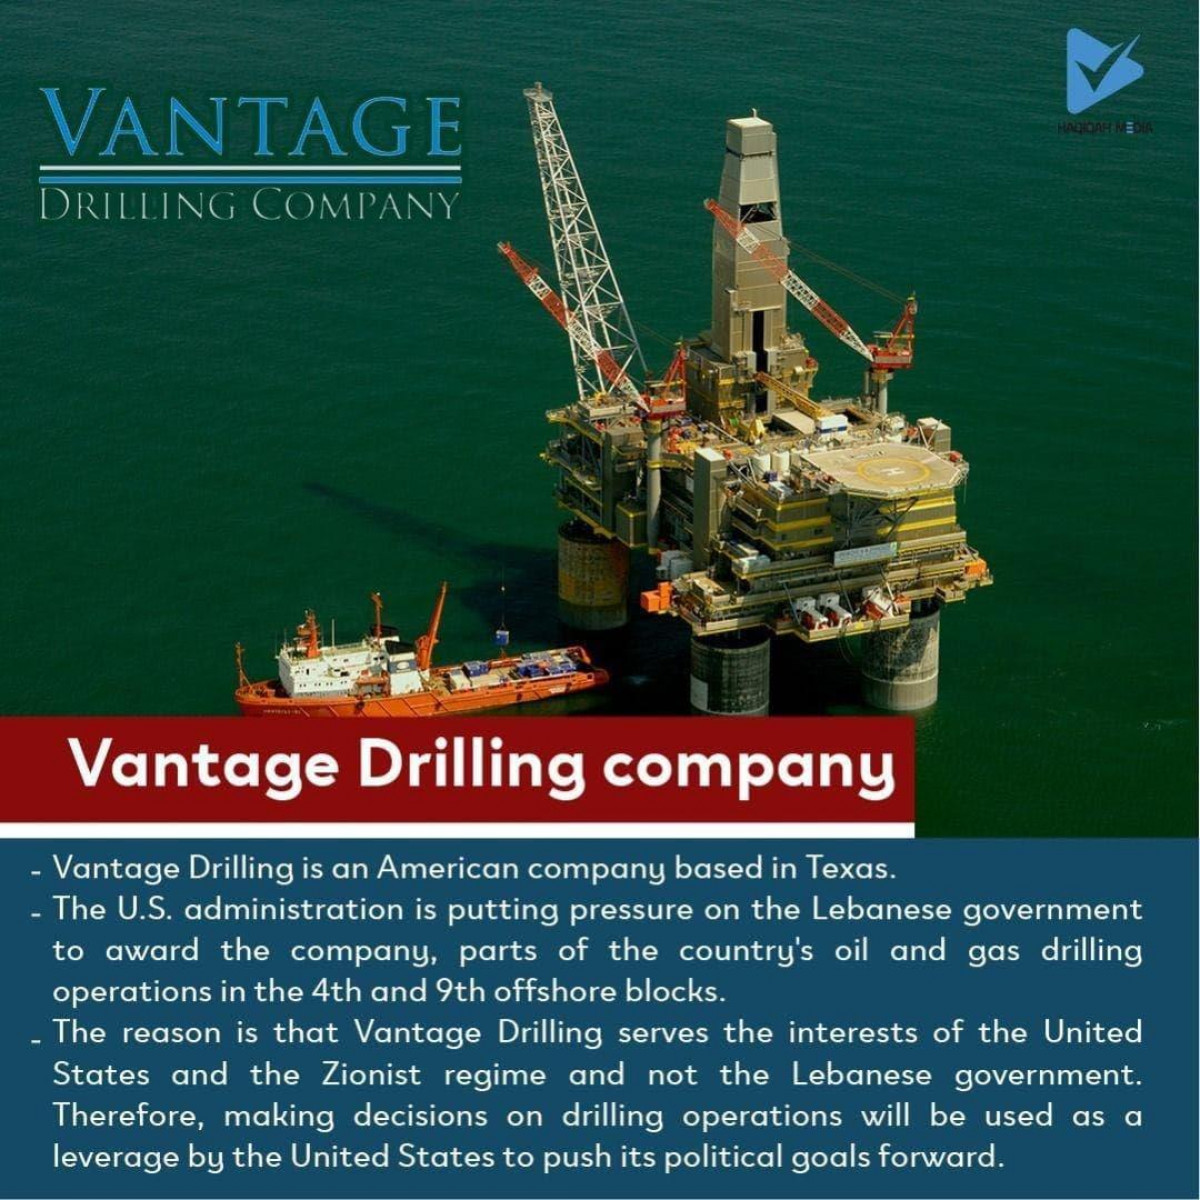 Vantage Drilling company